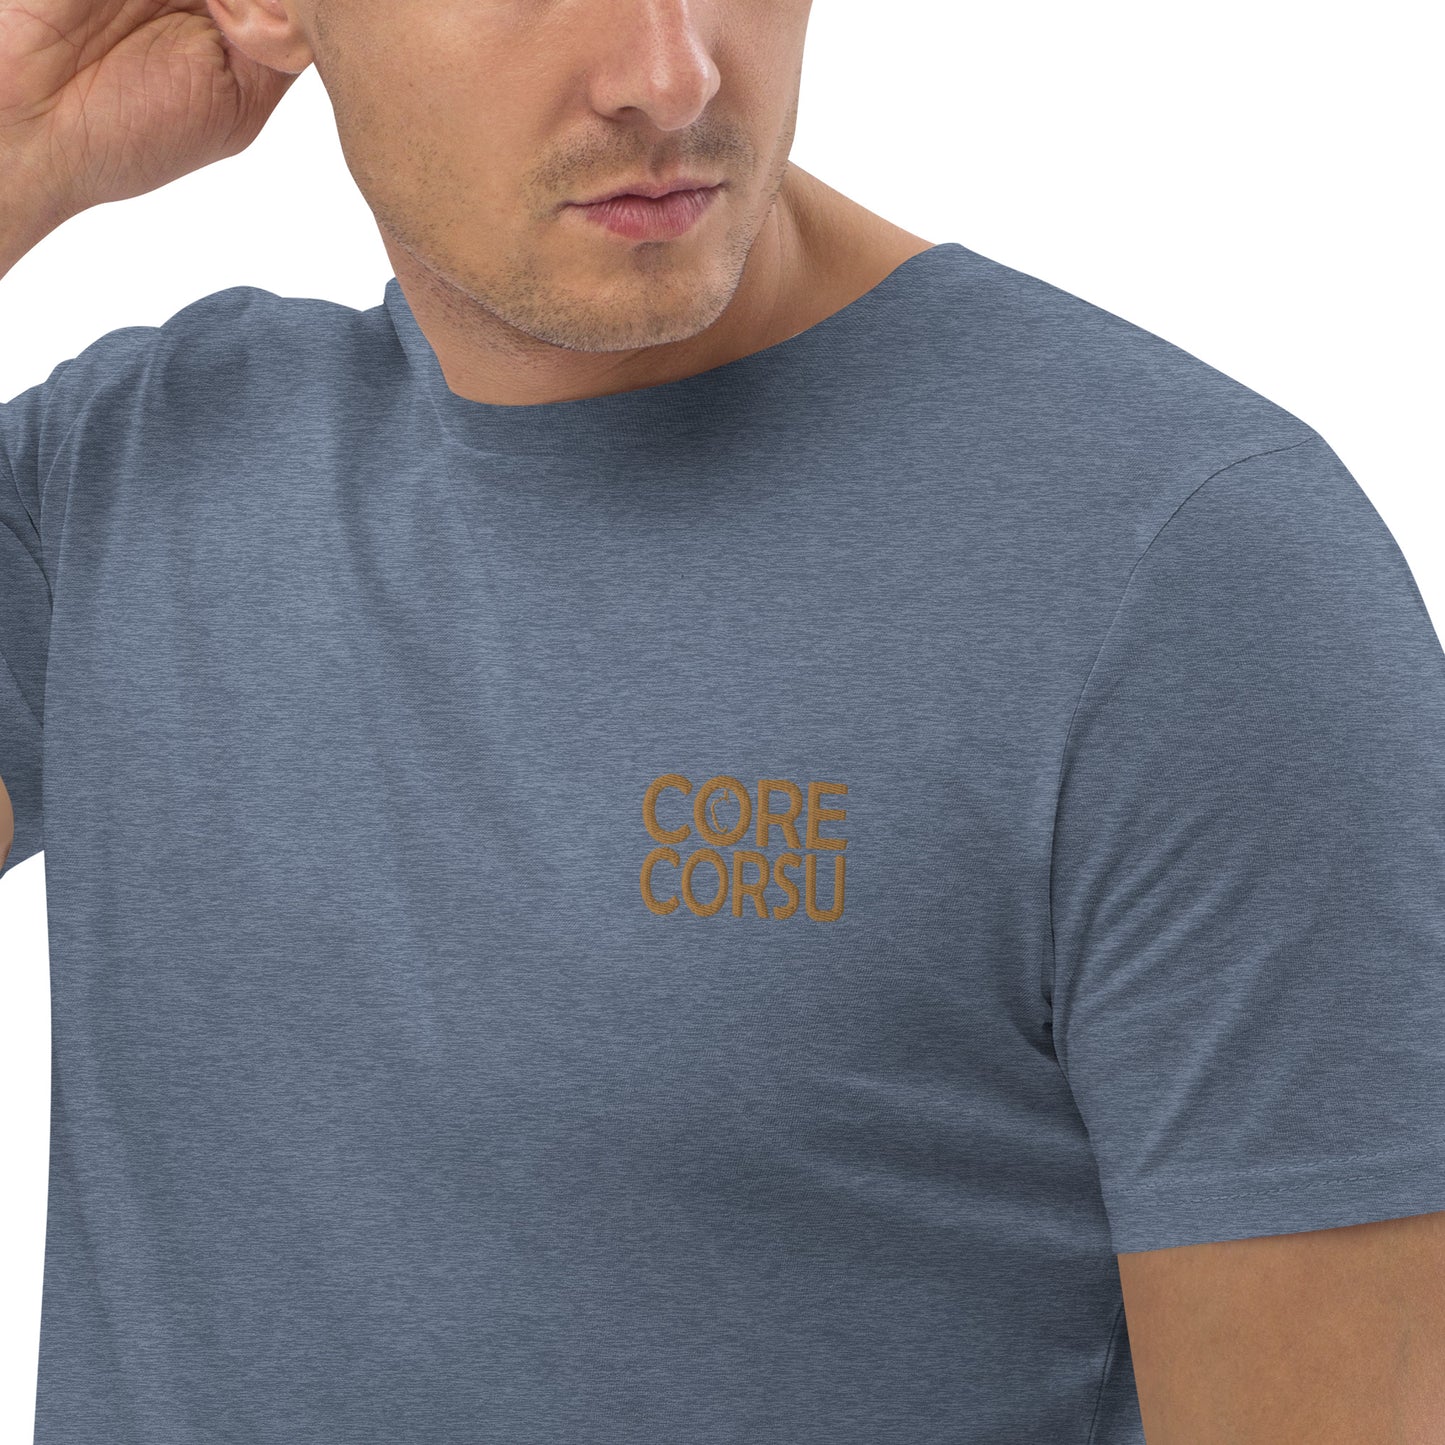 T-shirt unisexe en coton bio Brodé Core Corsu